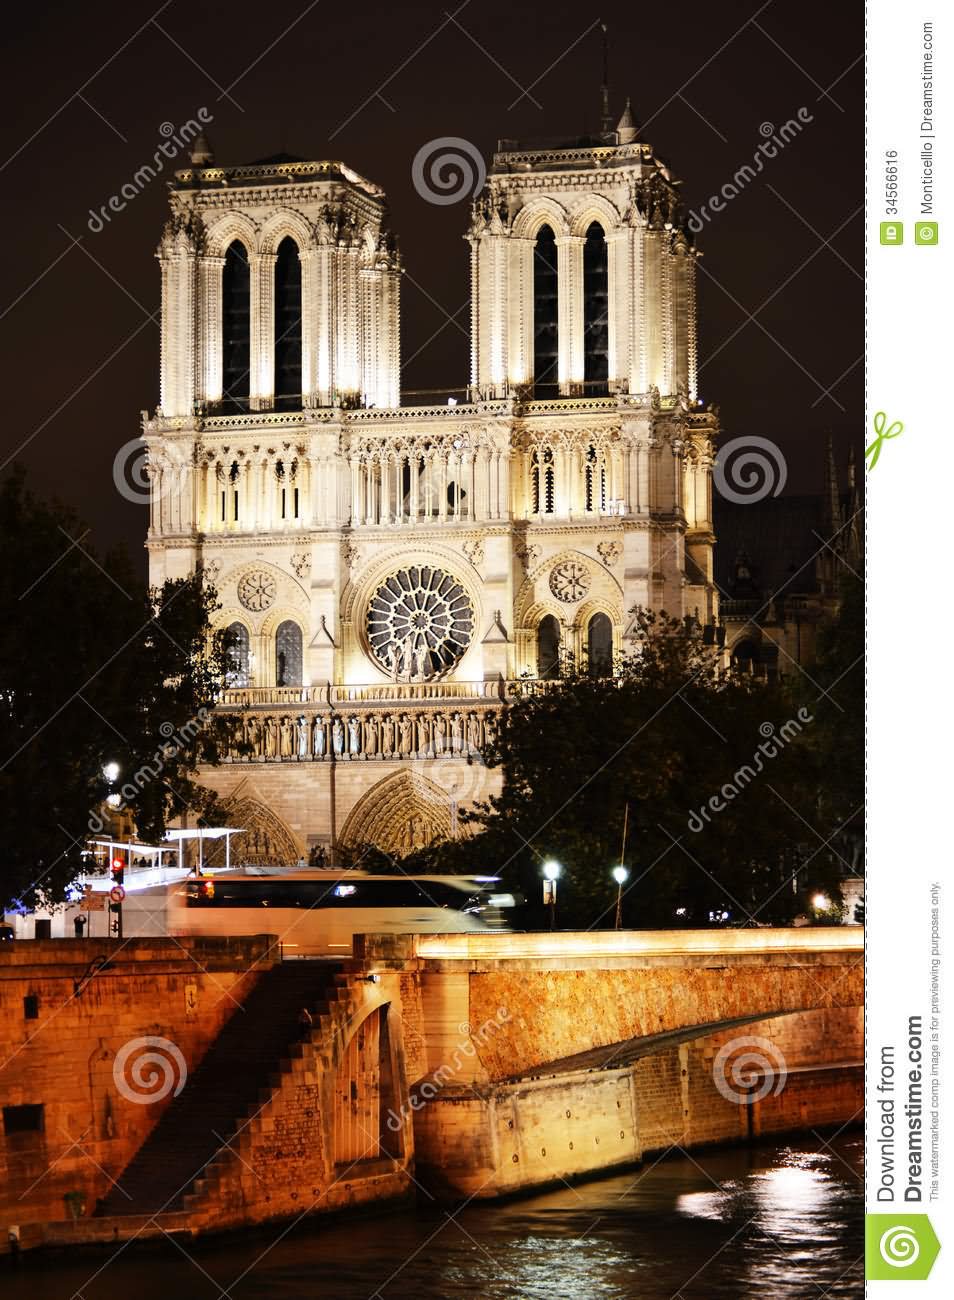 Awesome Night View of Notre Dame de Paris